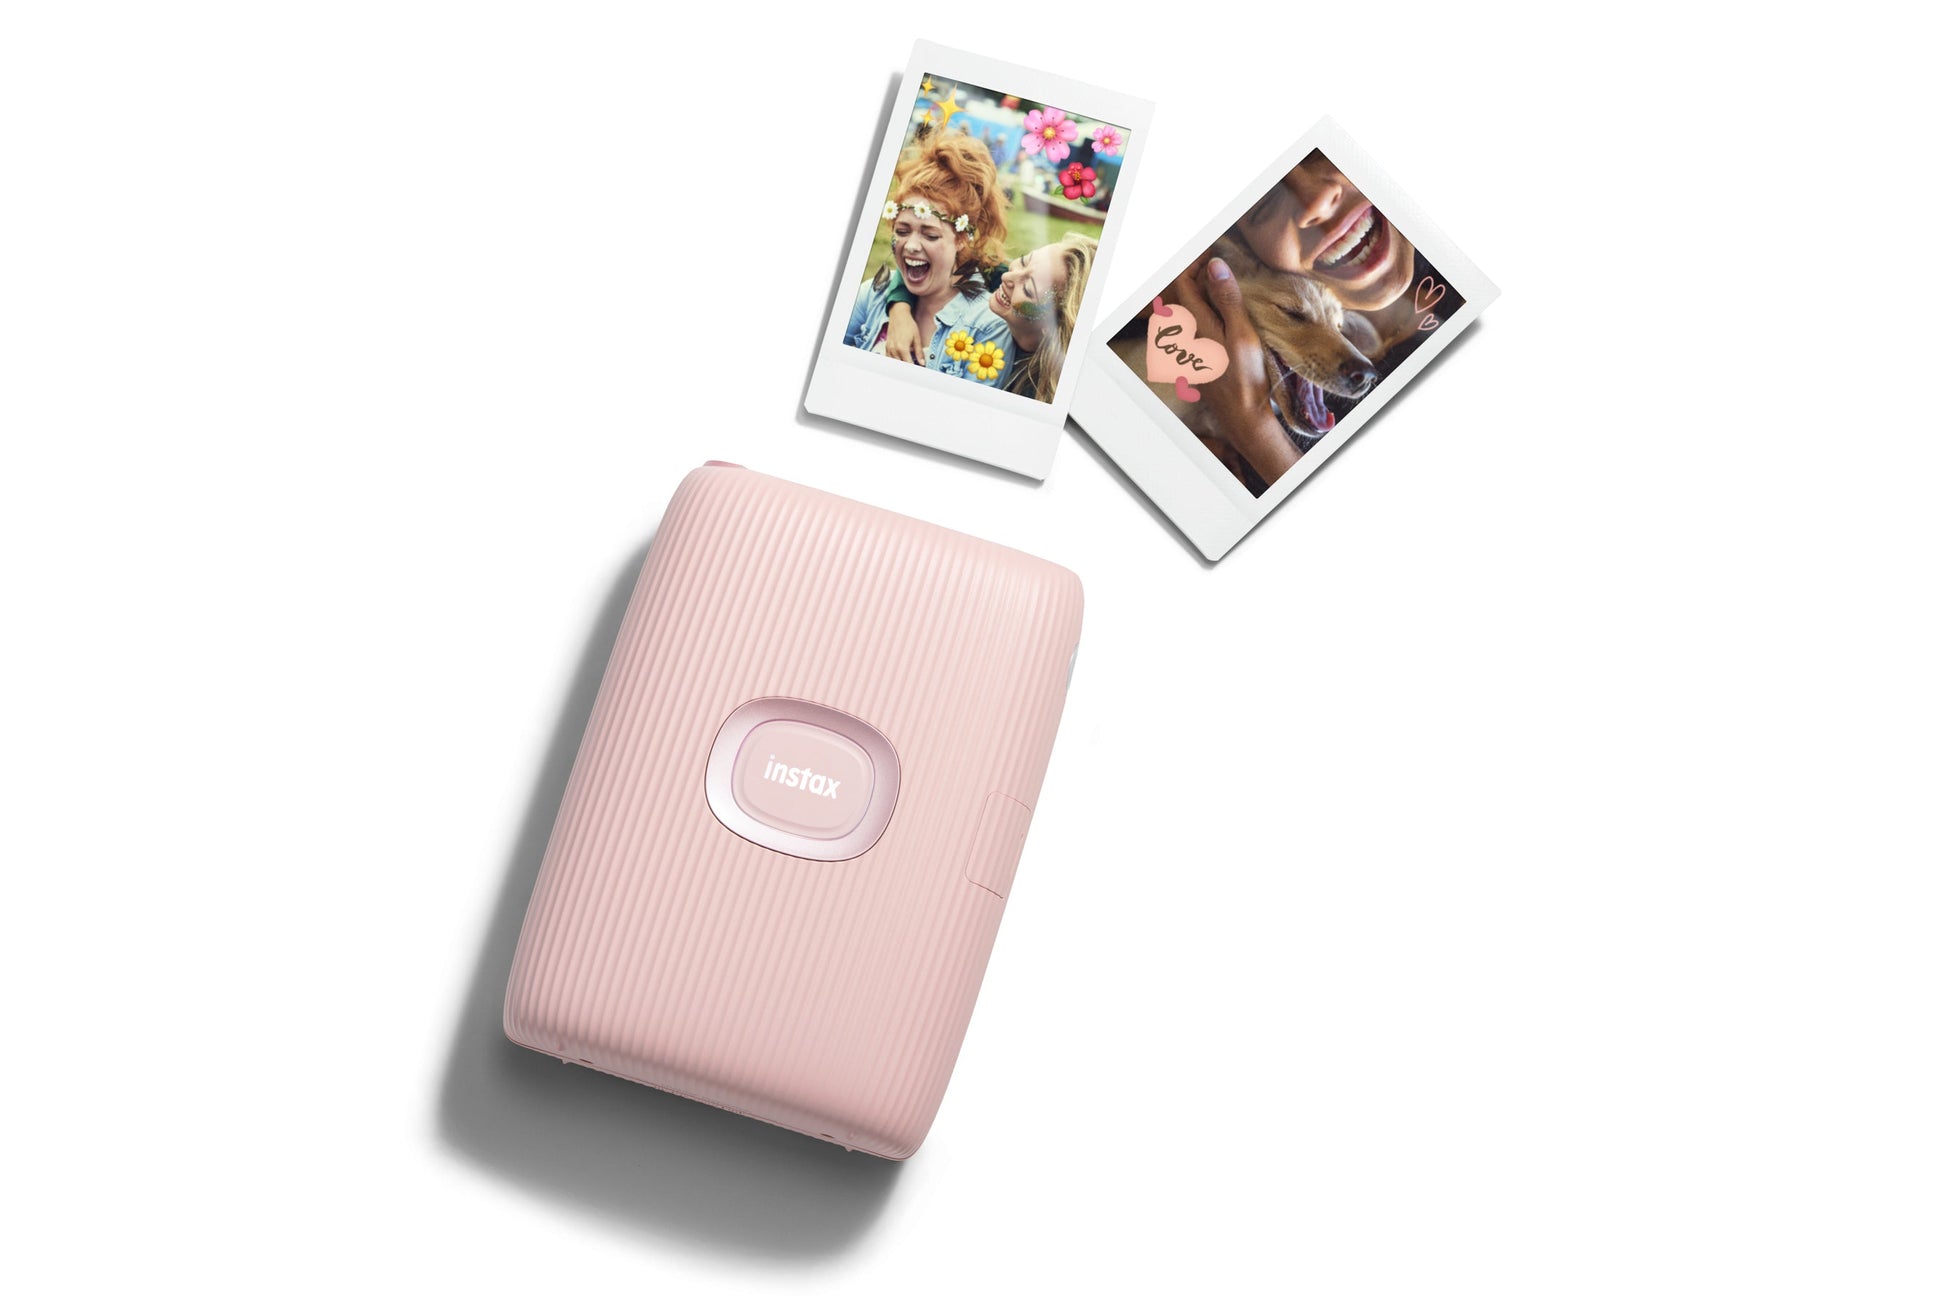 Fujifilm Instax Mini Link 2 Wireless Photo Printer - Soft Pink